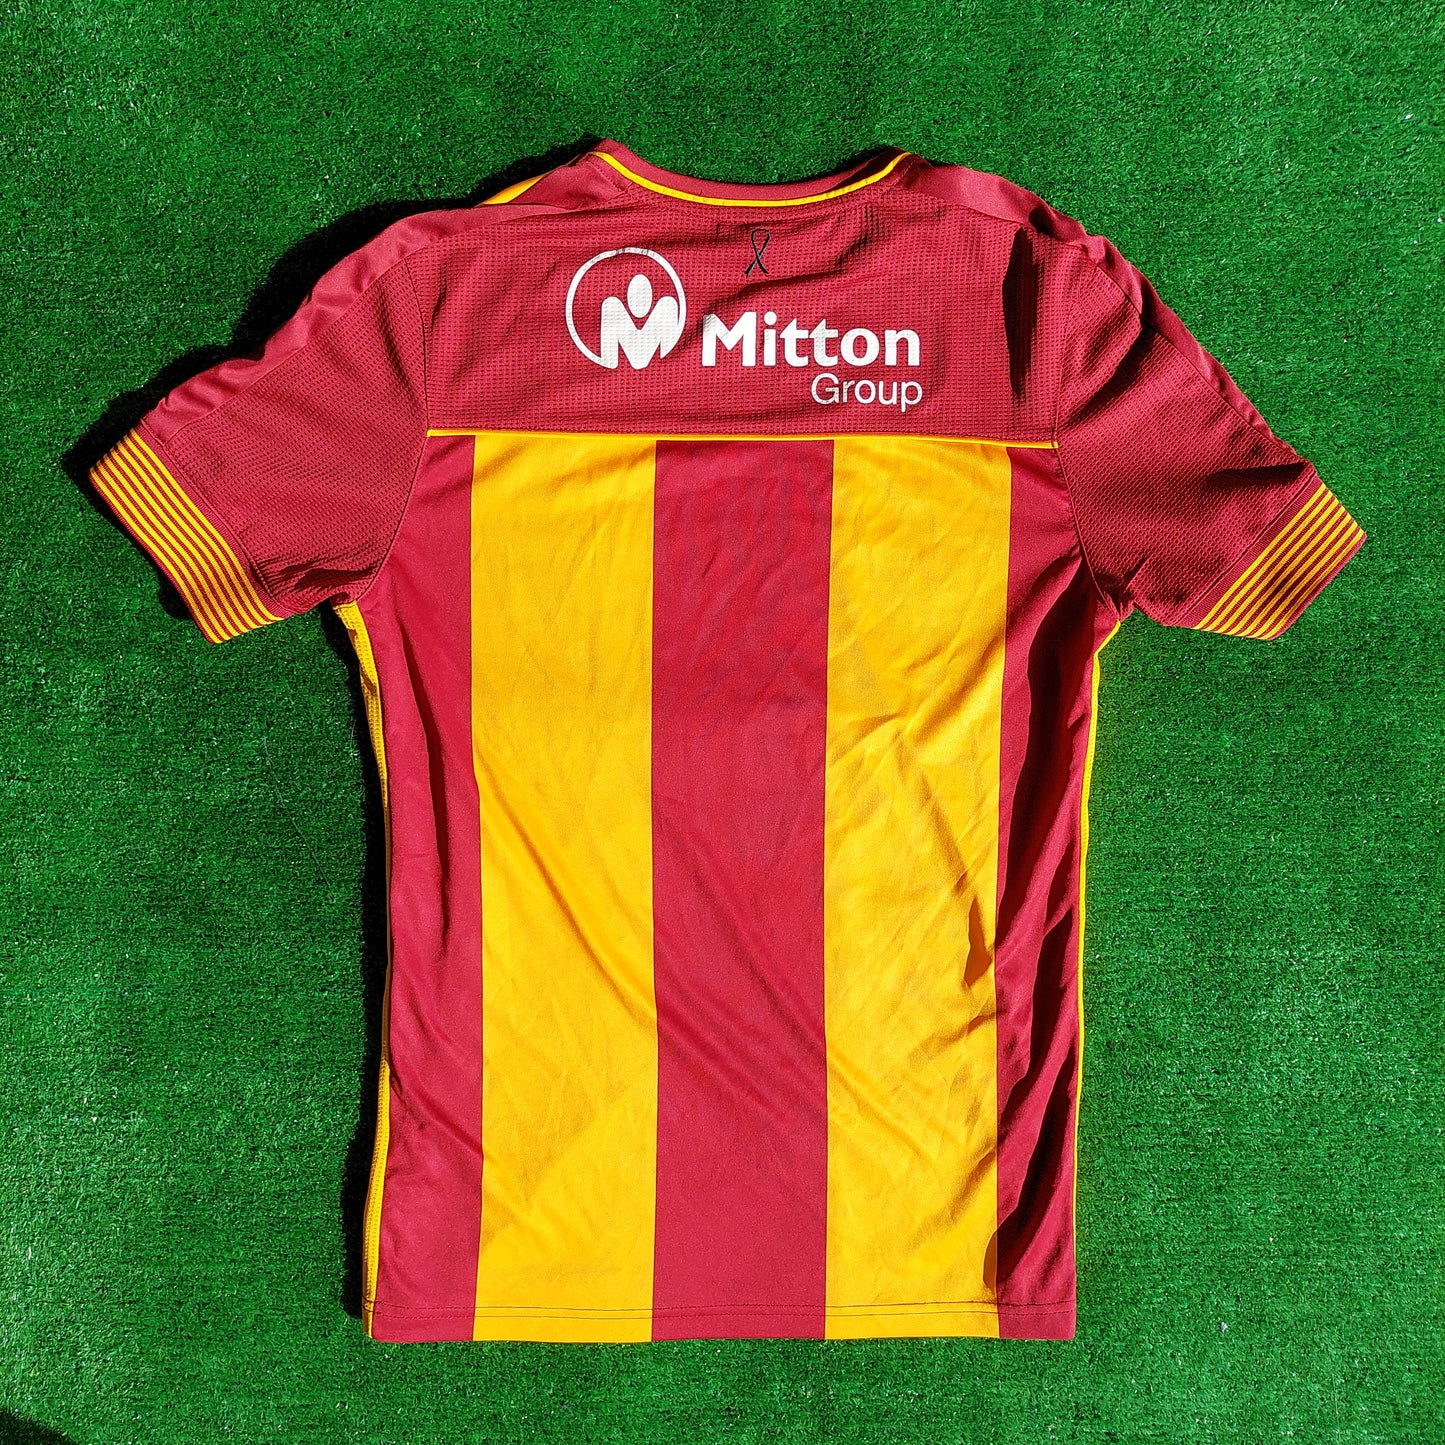 Bradford City 2017/18 Home Shirt (Excellent) - Size S